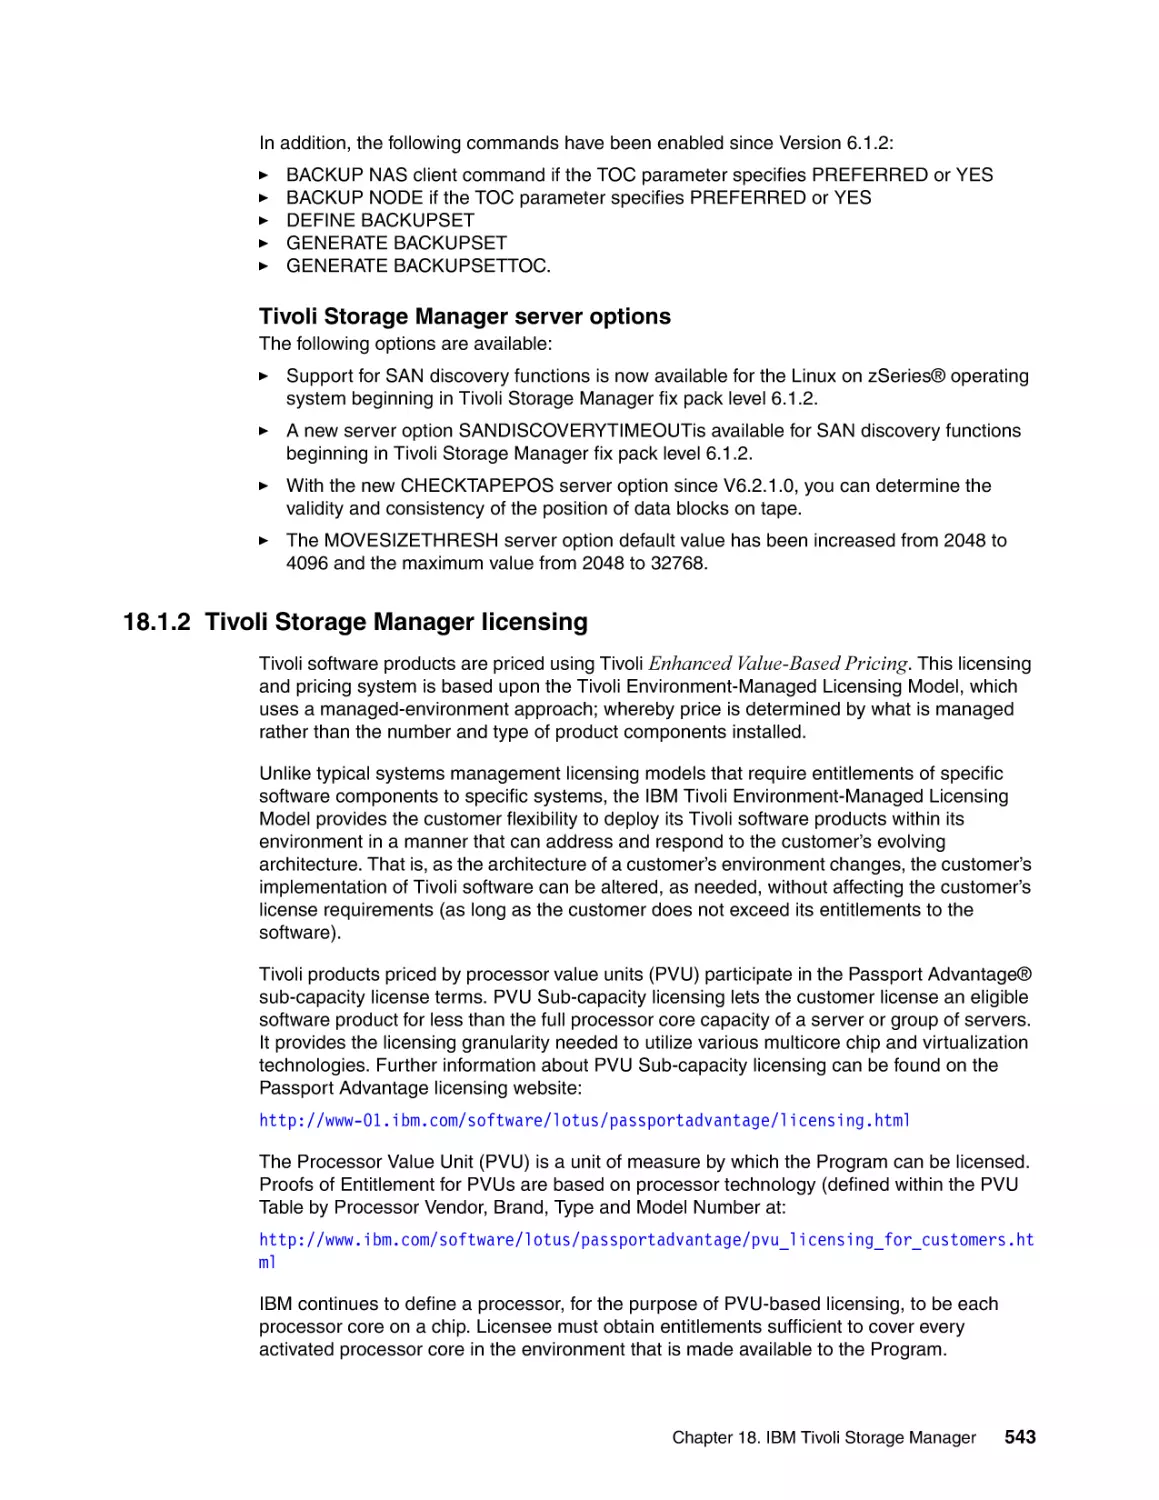 18.1.2 Tivoli Storage Manager licensing